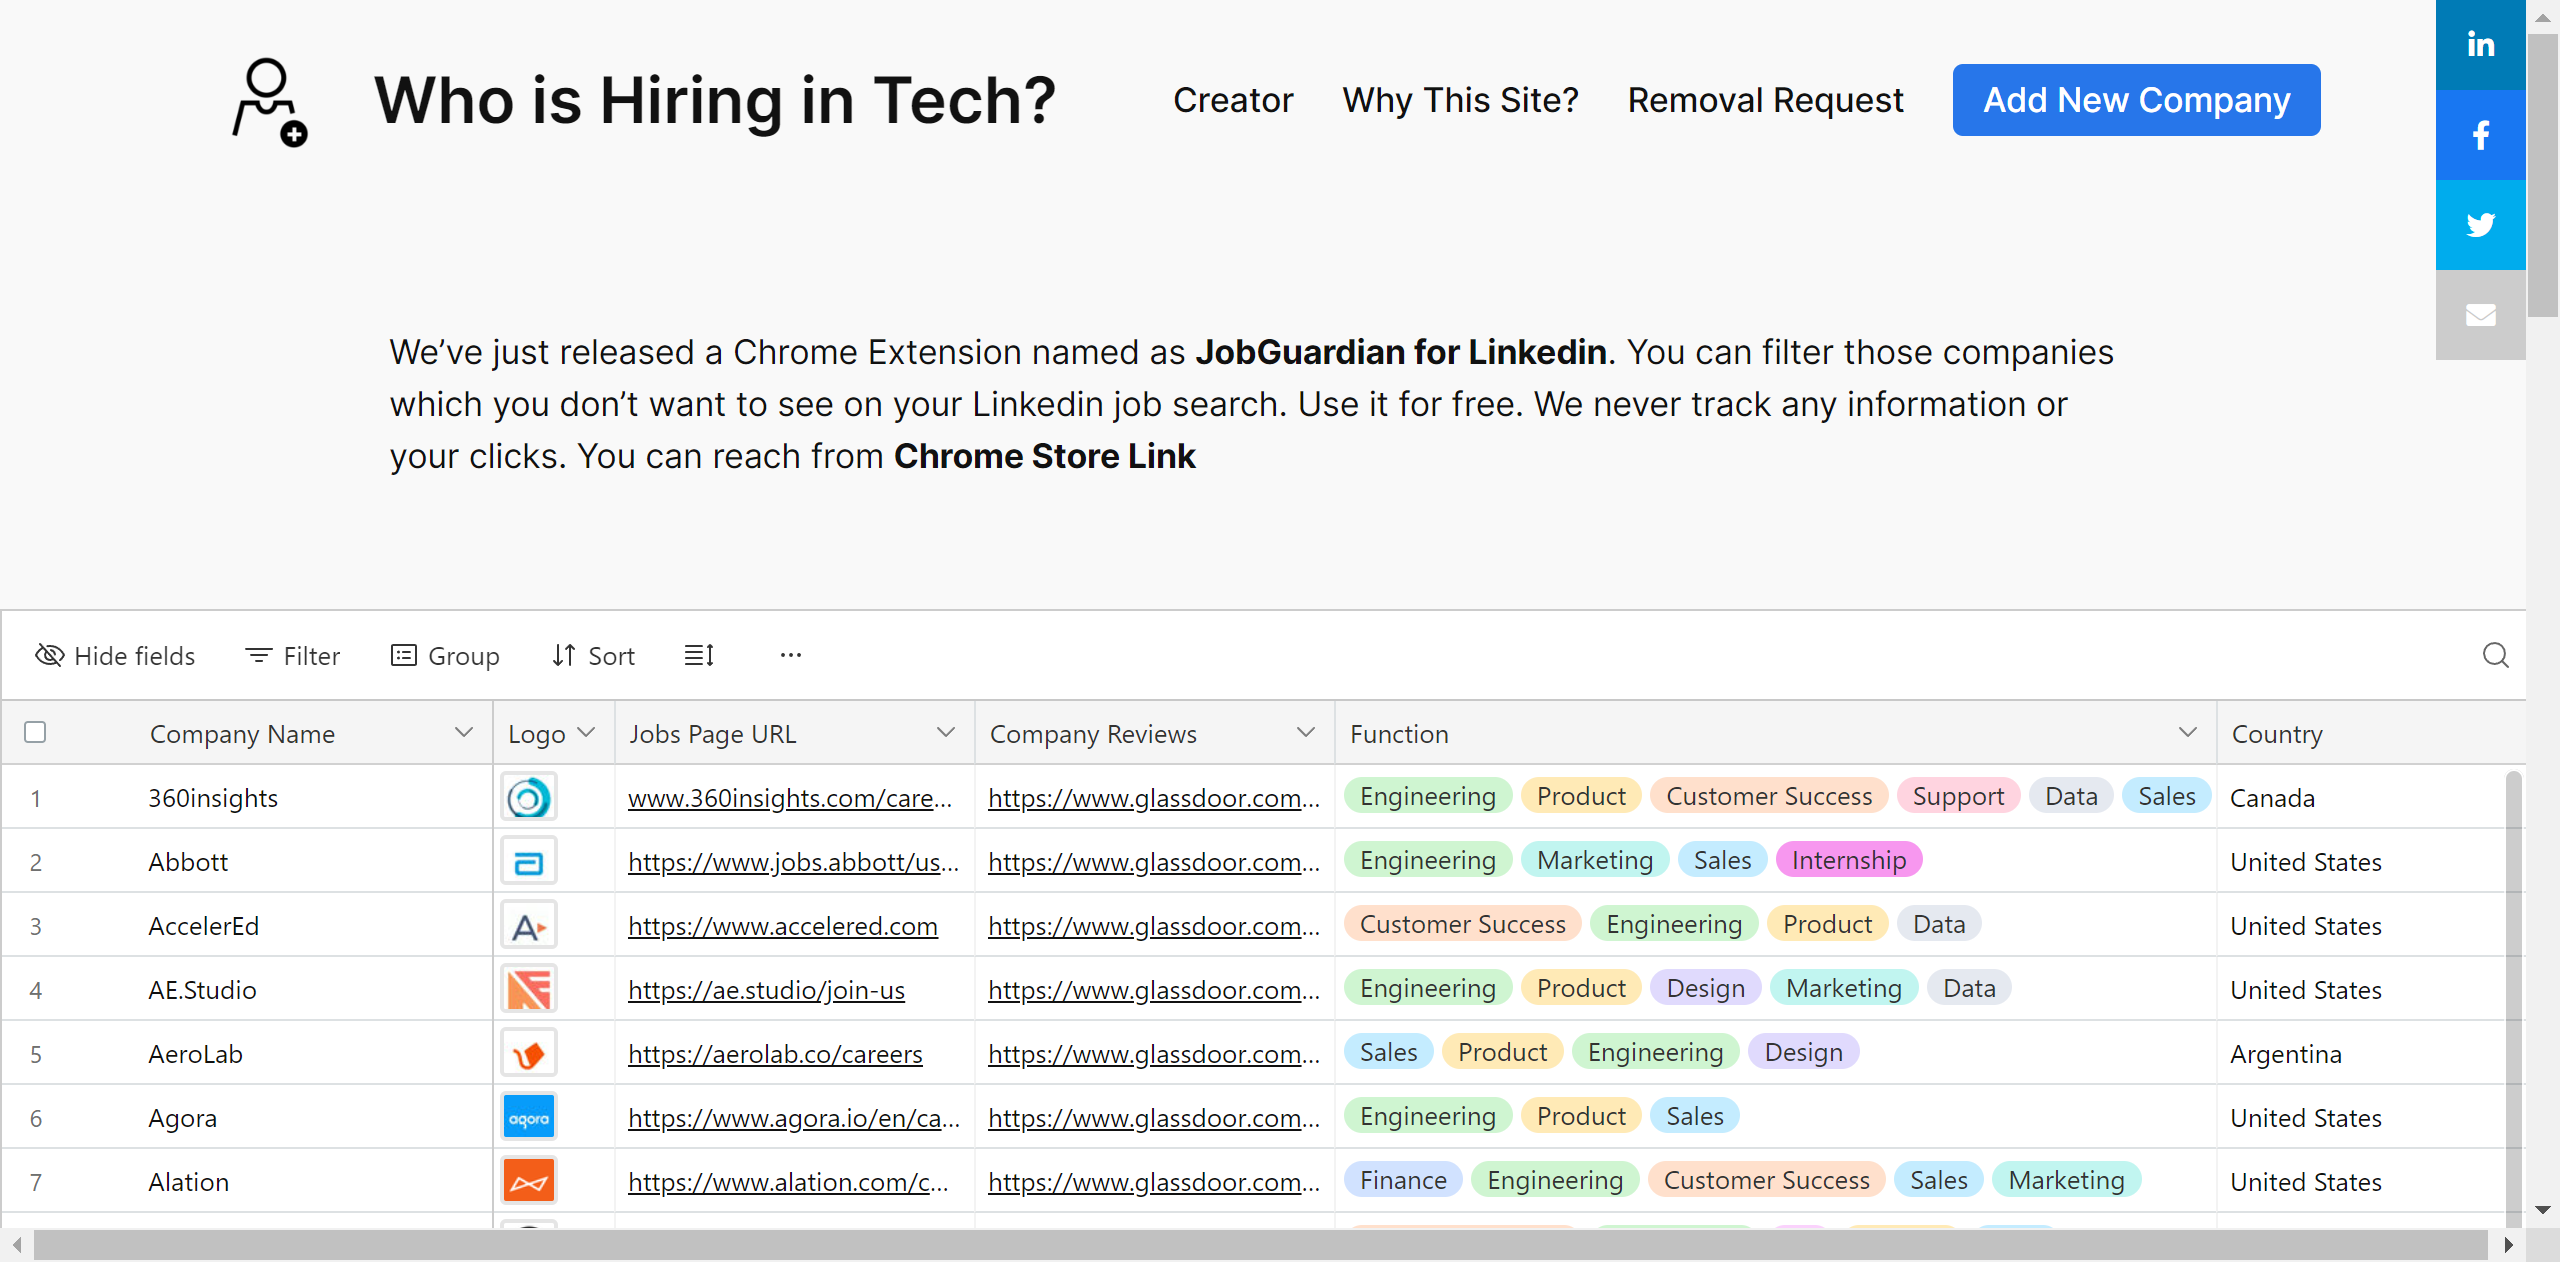 Who is Hiring in Tech? homepage screenshot